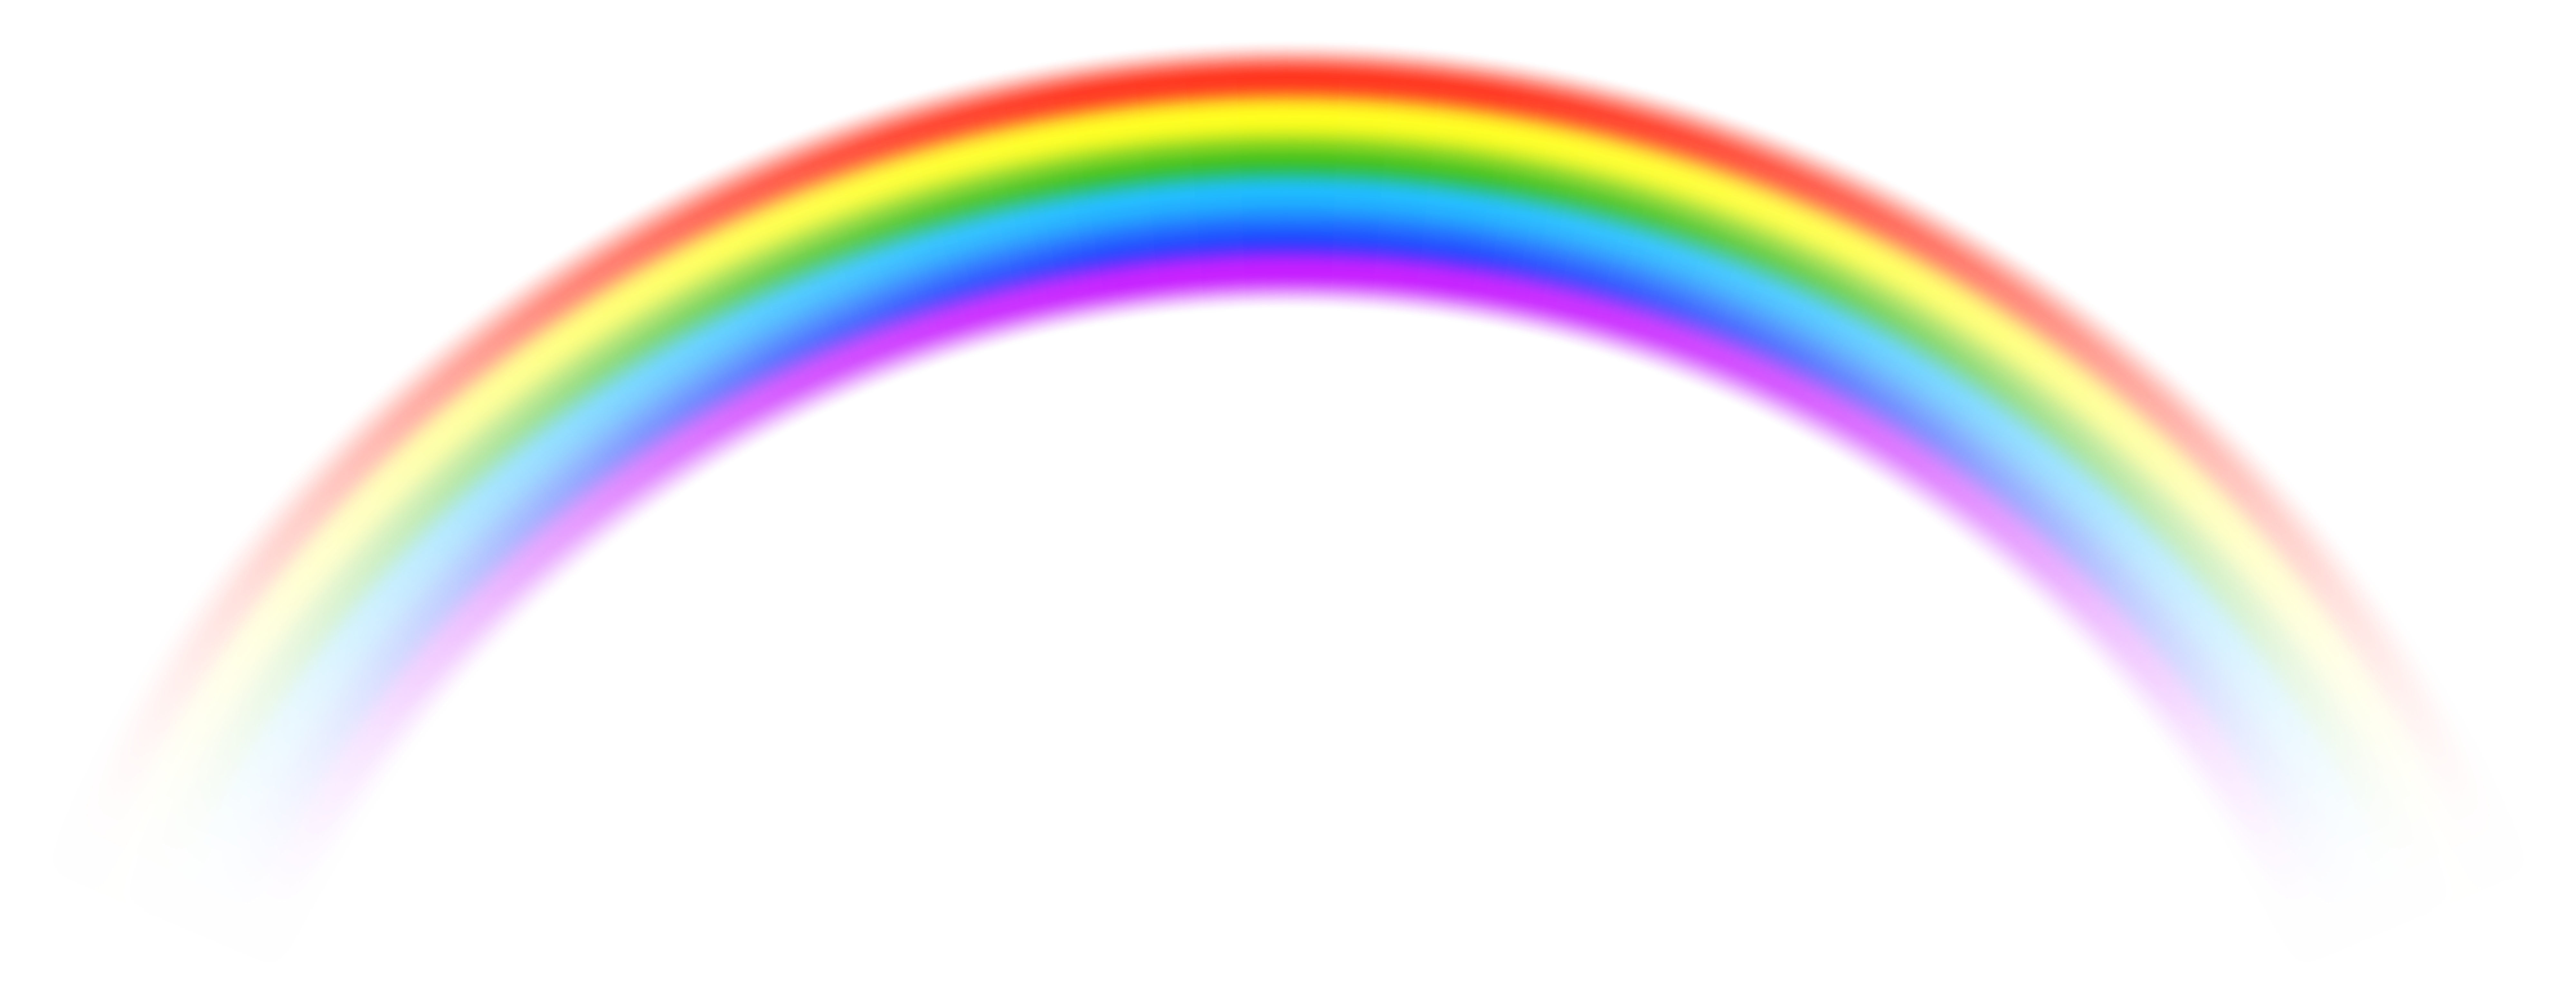 rainbow clipart transparent - photo #27